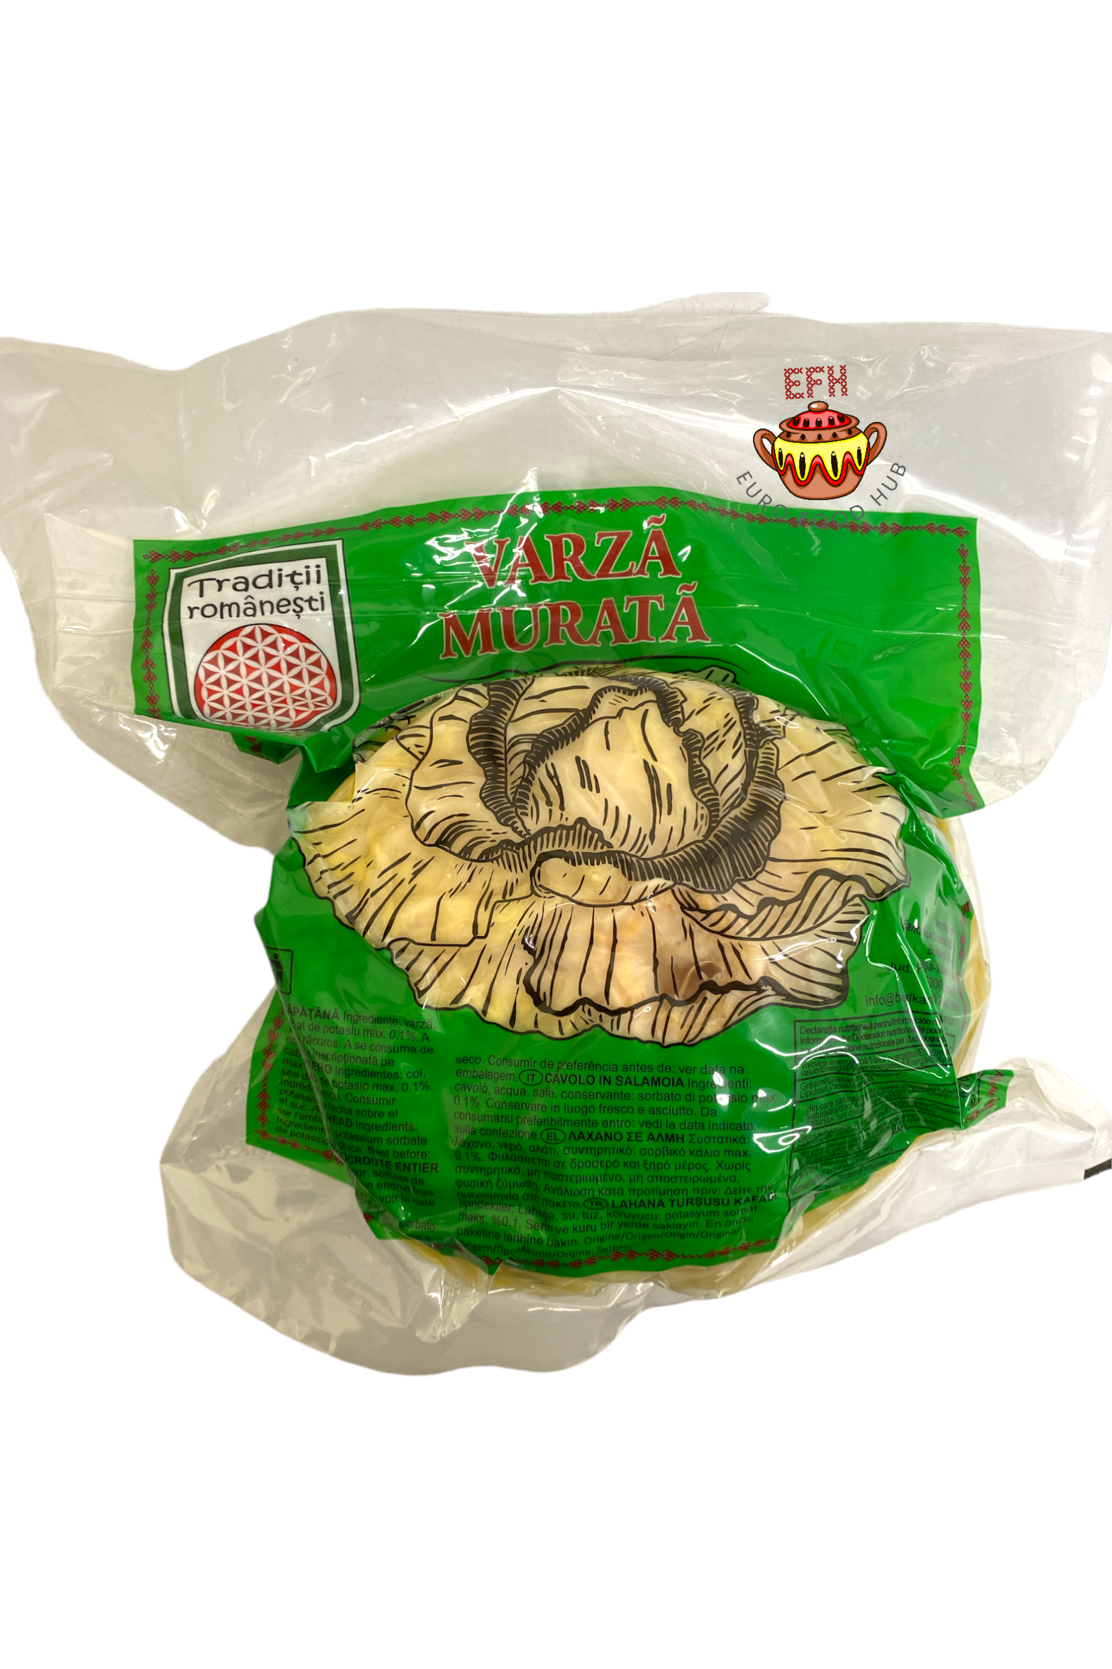 Romanian Sour Cabbage Head - Varza Murata - Traditii Romanesti - Sauerkraut